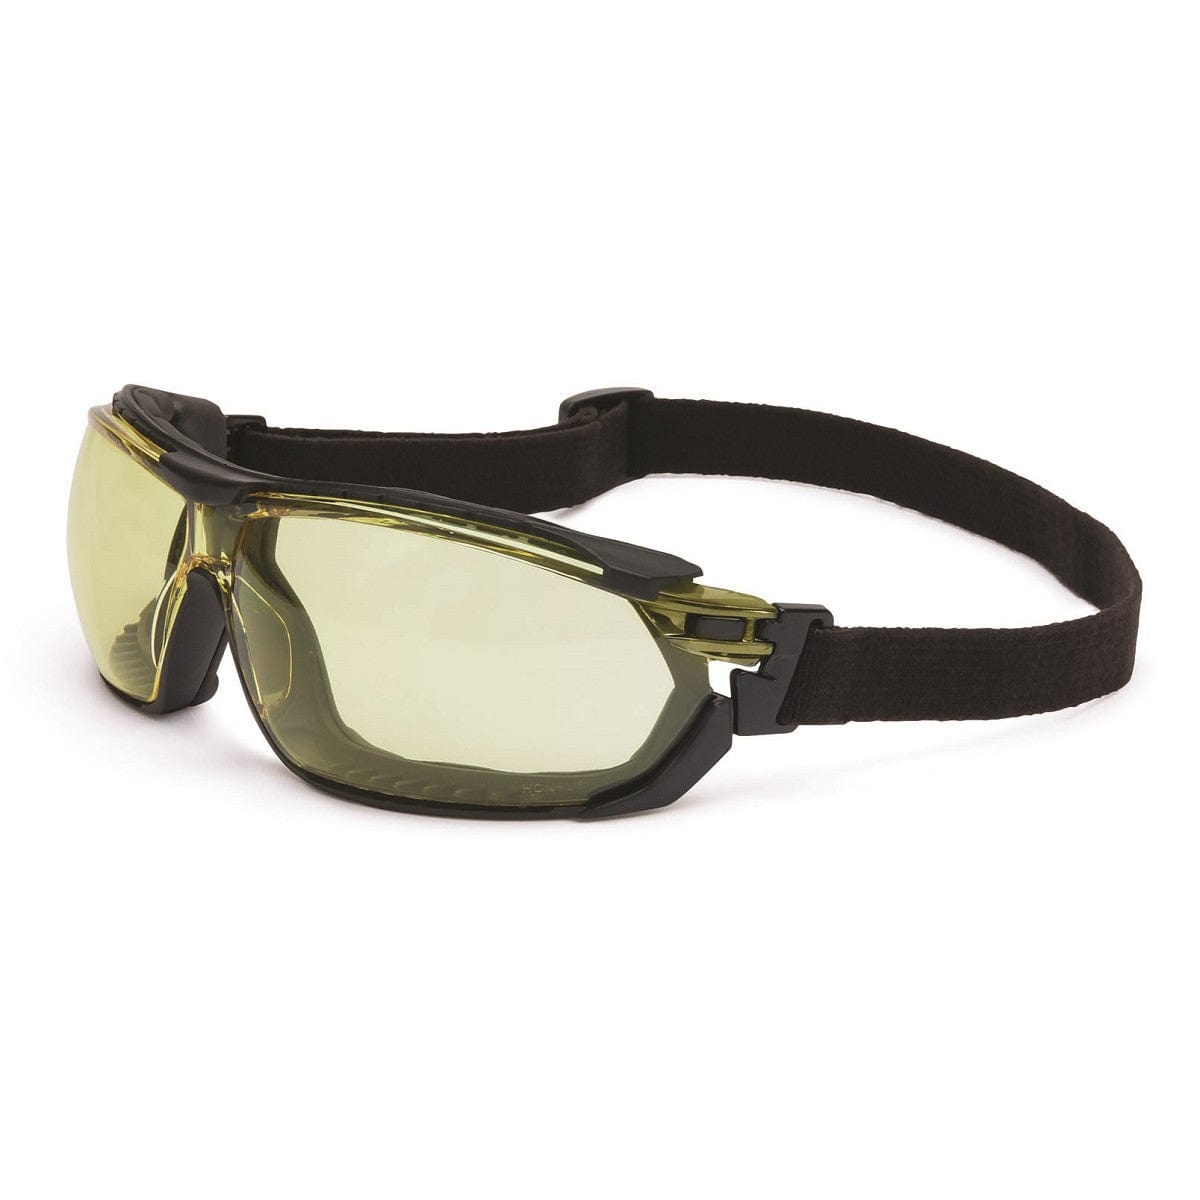 Uvex Tirade Safety Glasses Amber Anti-Fog Lens Goggle Strap Installed